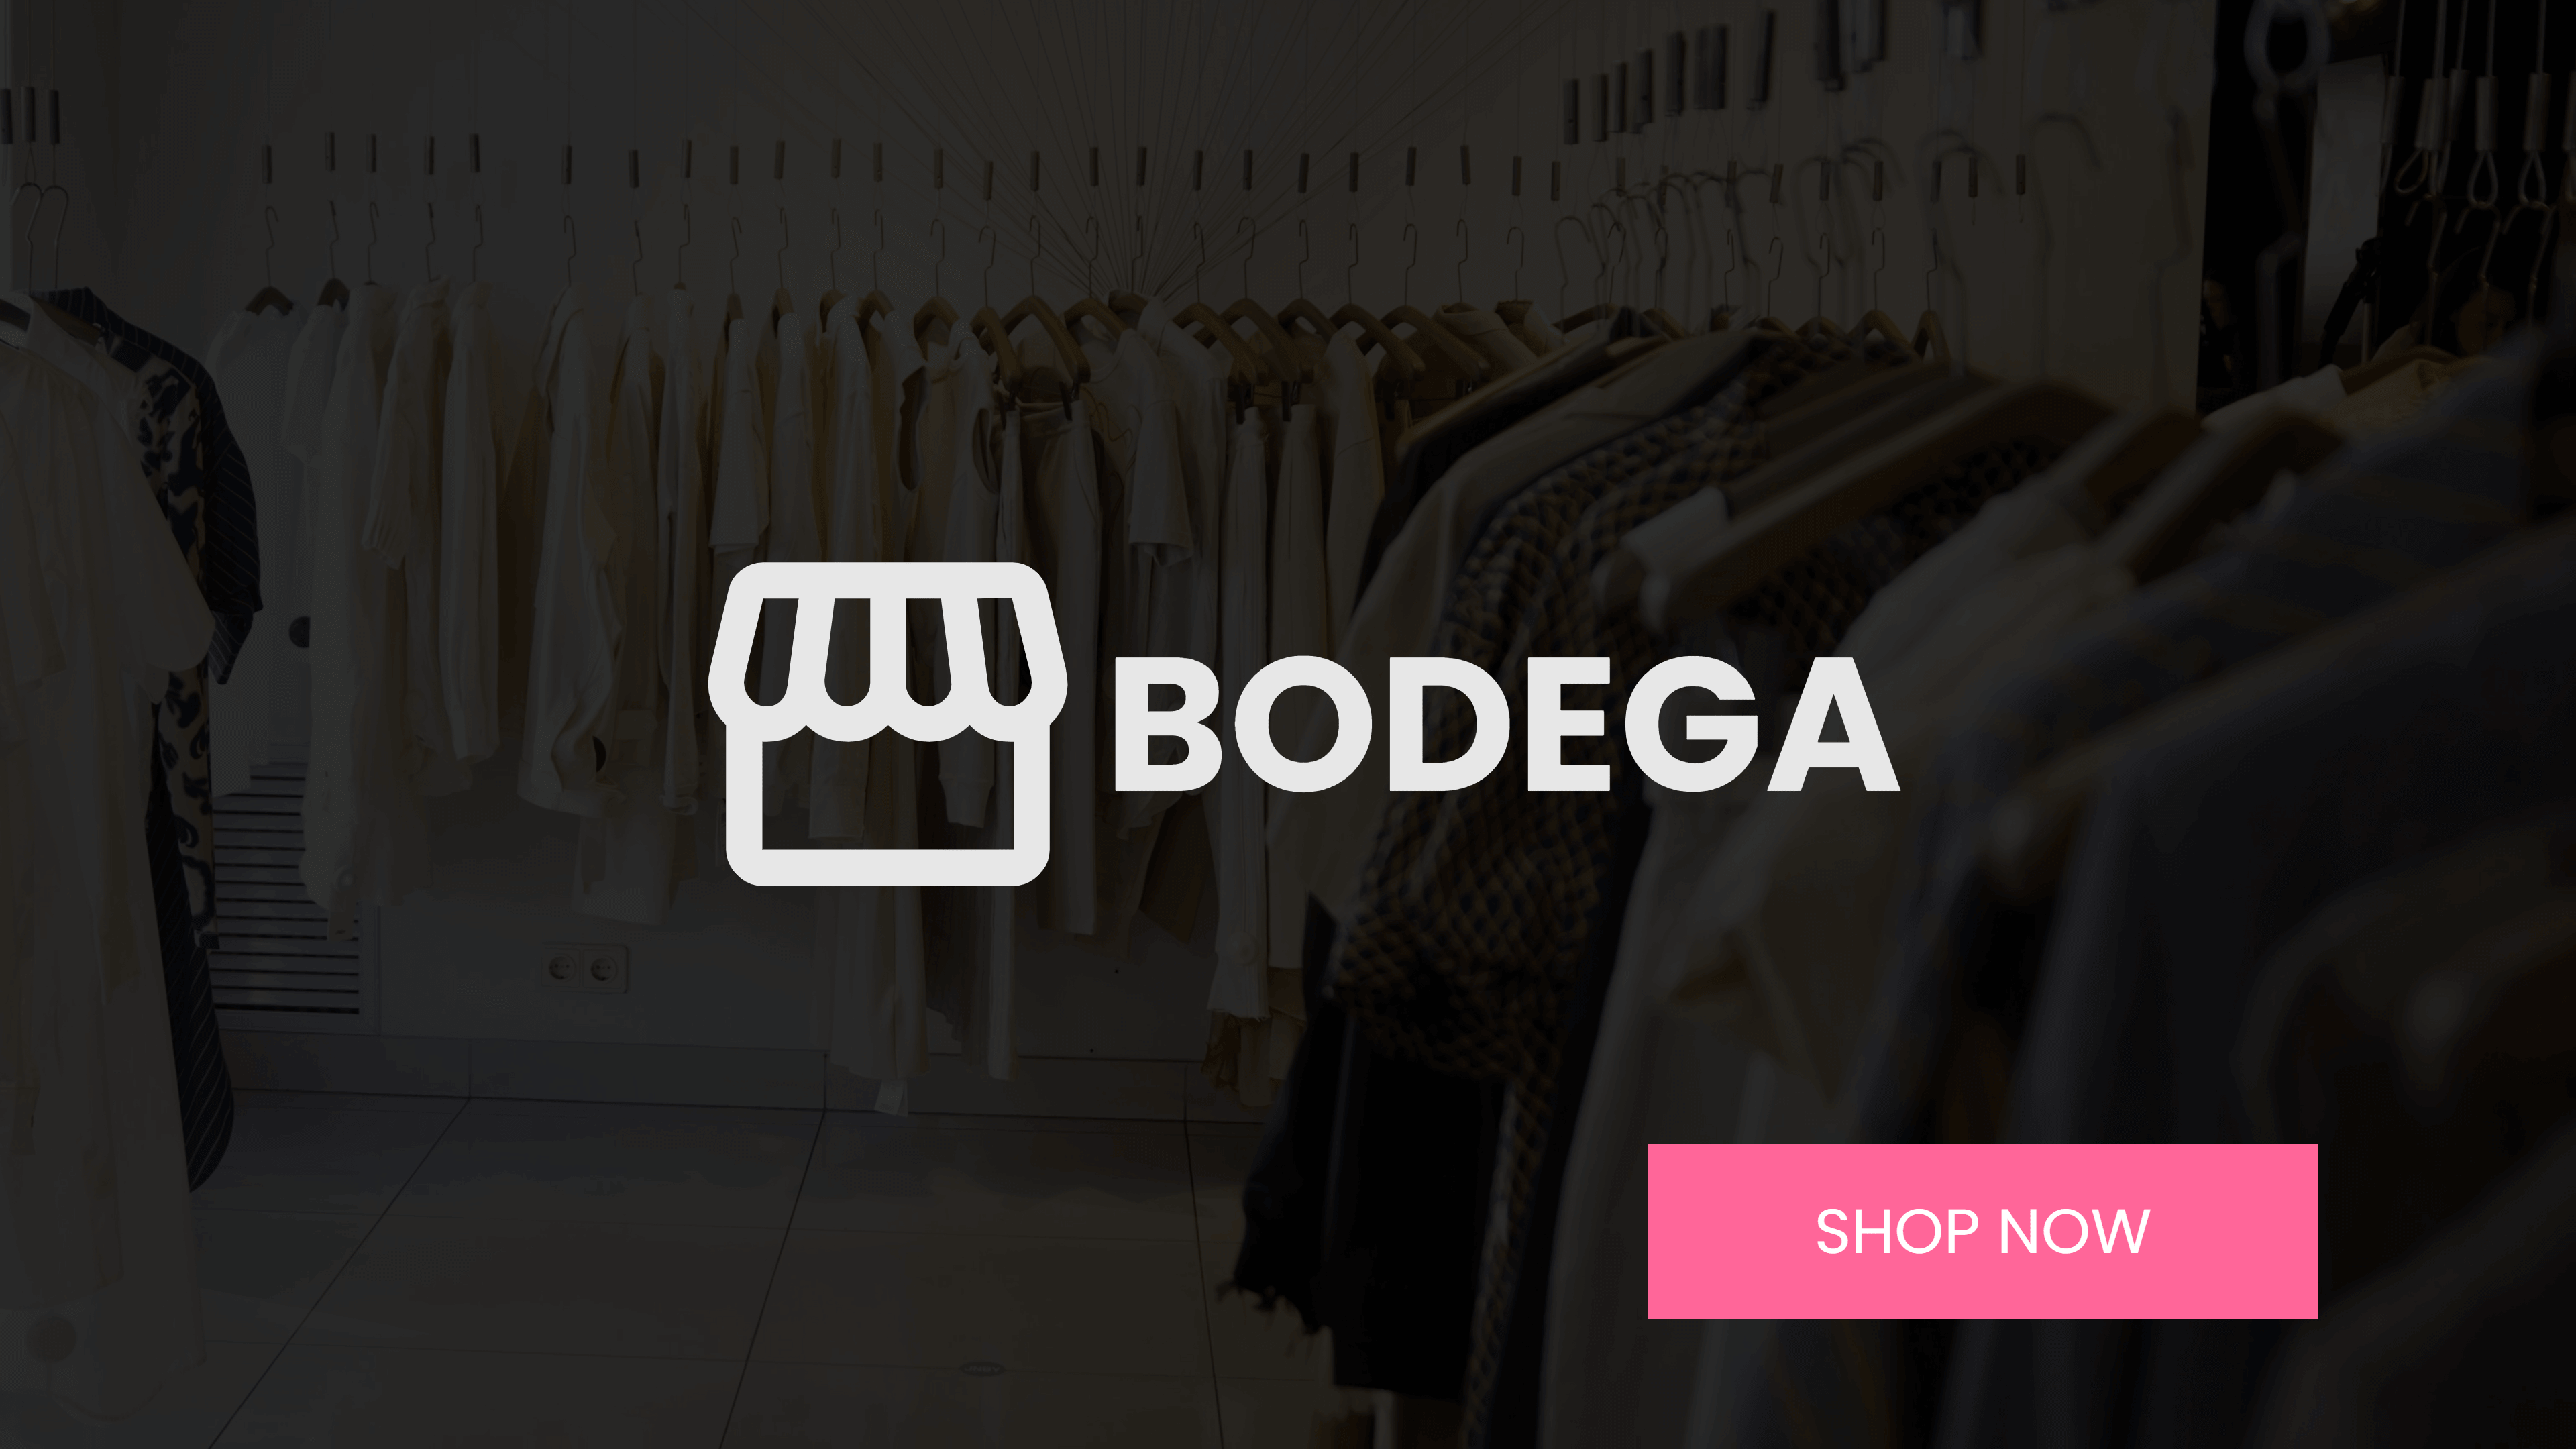 Bodega · Online shopping web app based on peruvian “bodegas”.